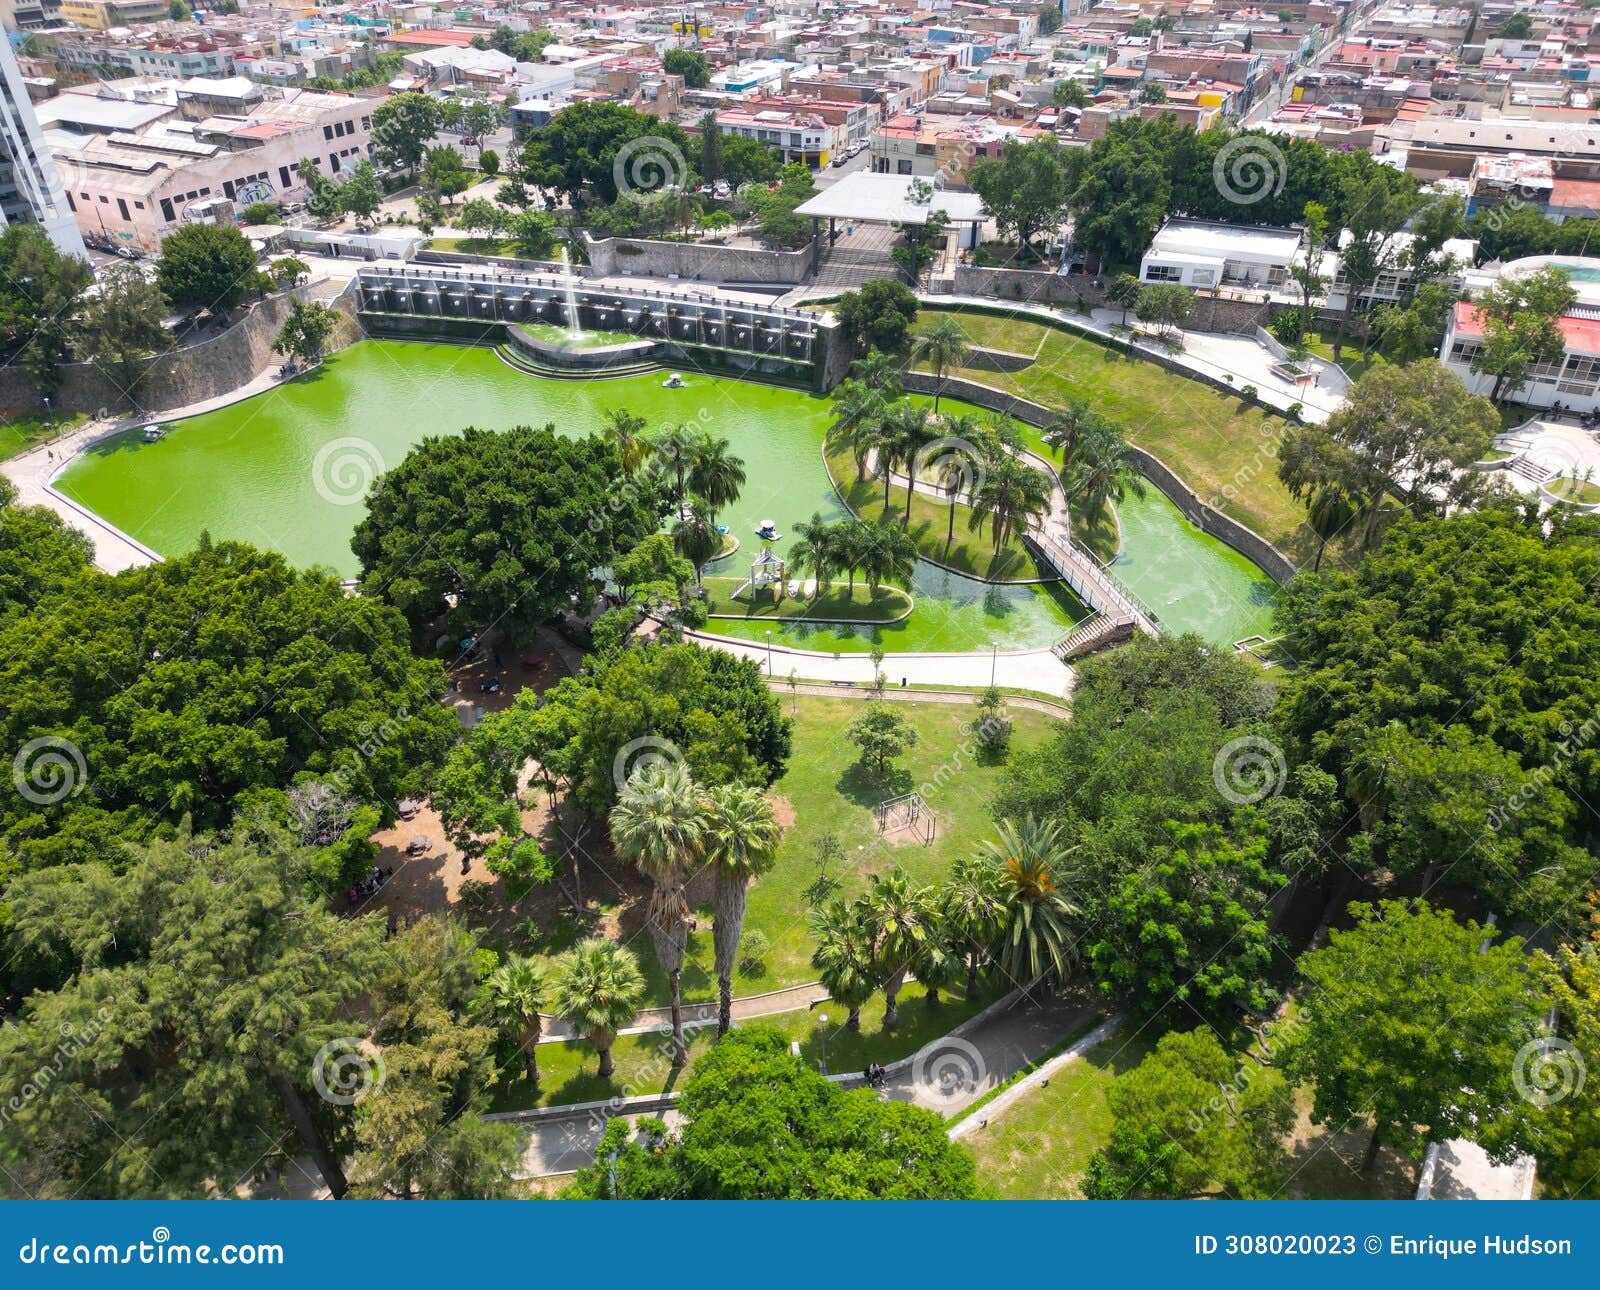 aerial view of artificial lake in parque alcalde in guadalajara